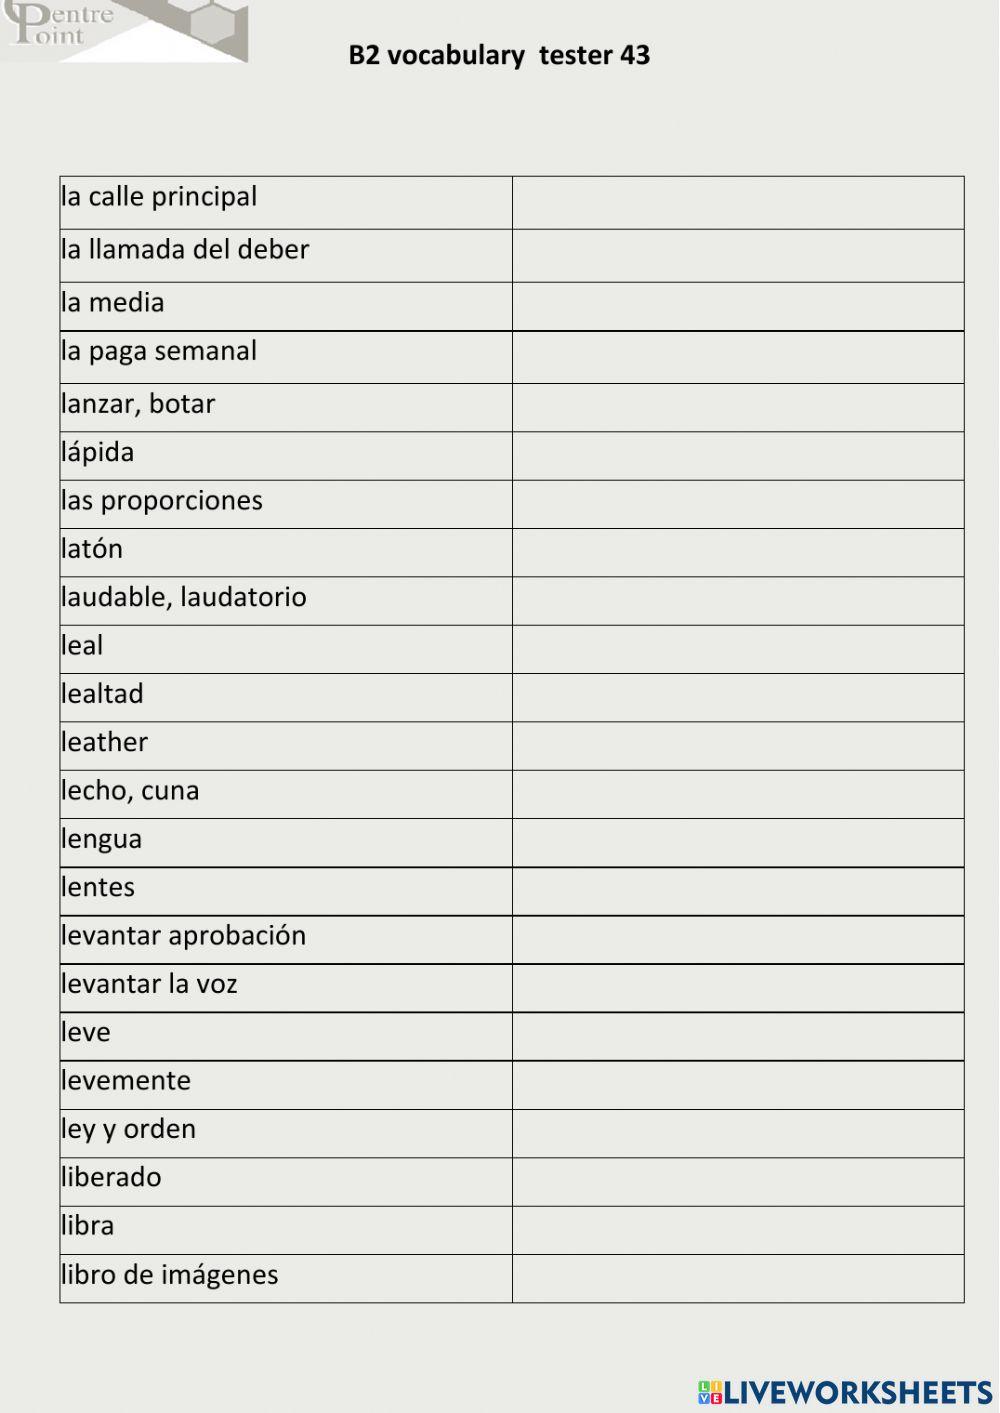 Vocabulario b2 - page 43 worksheet | Live Worksheets